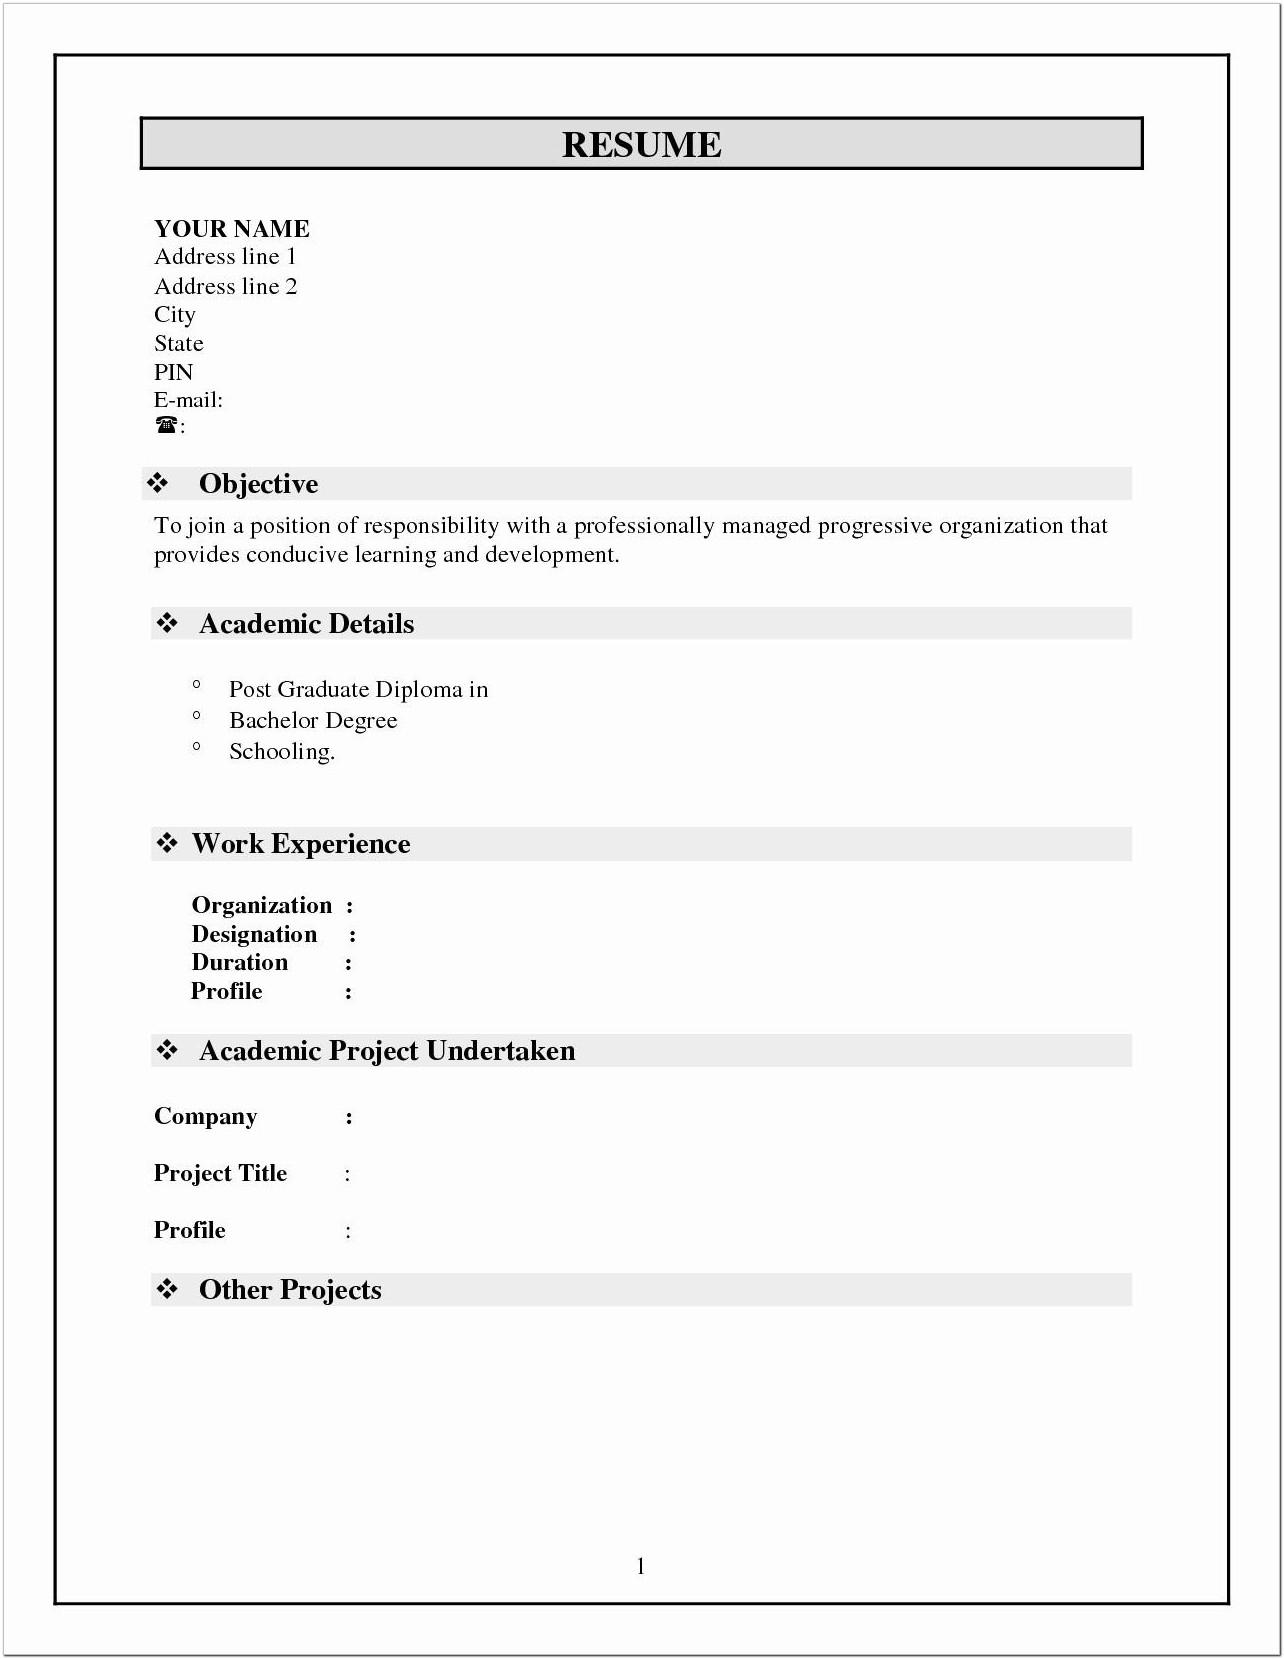 Biodata Resume Format Doc